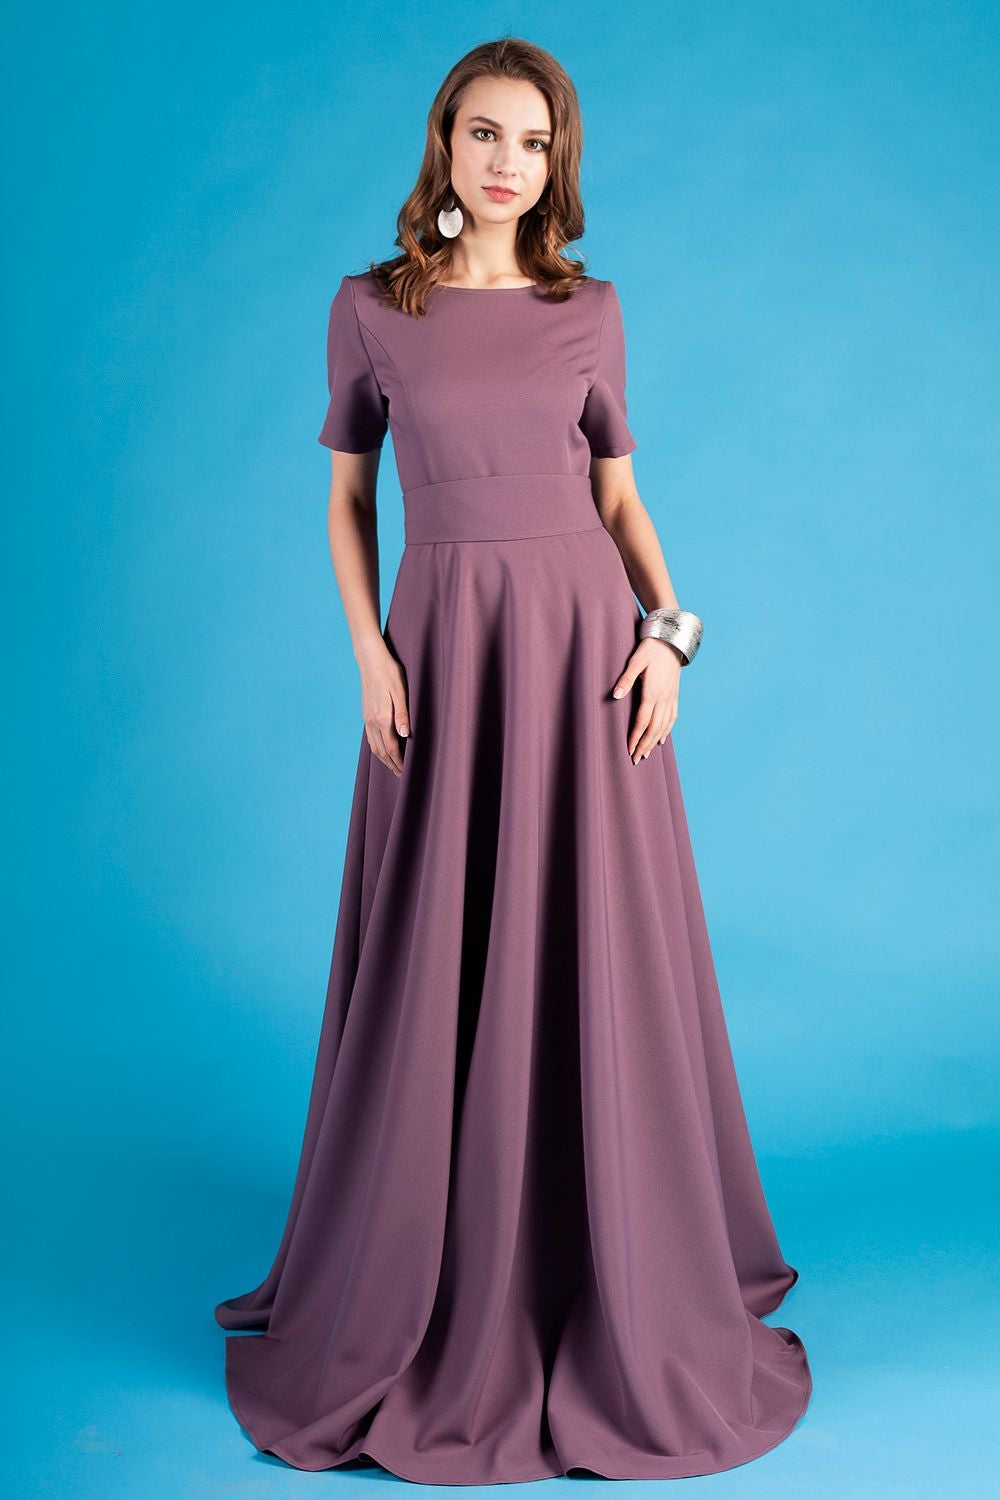 Grey purple maxi dress with circle skirts